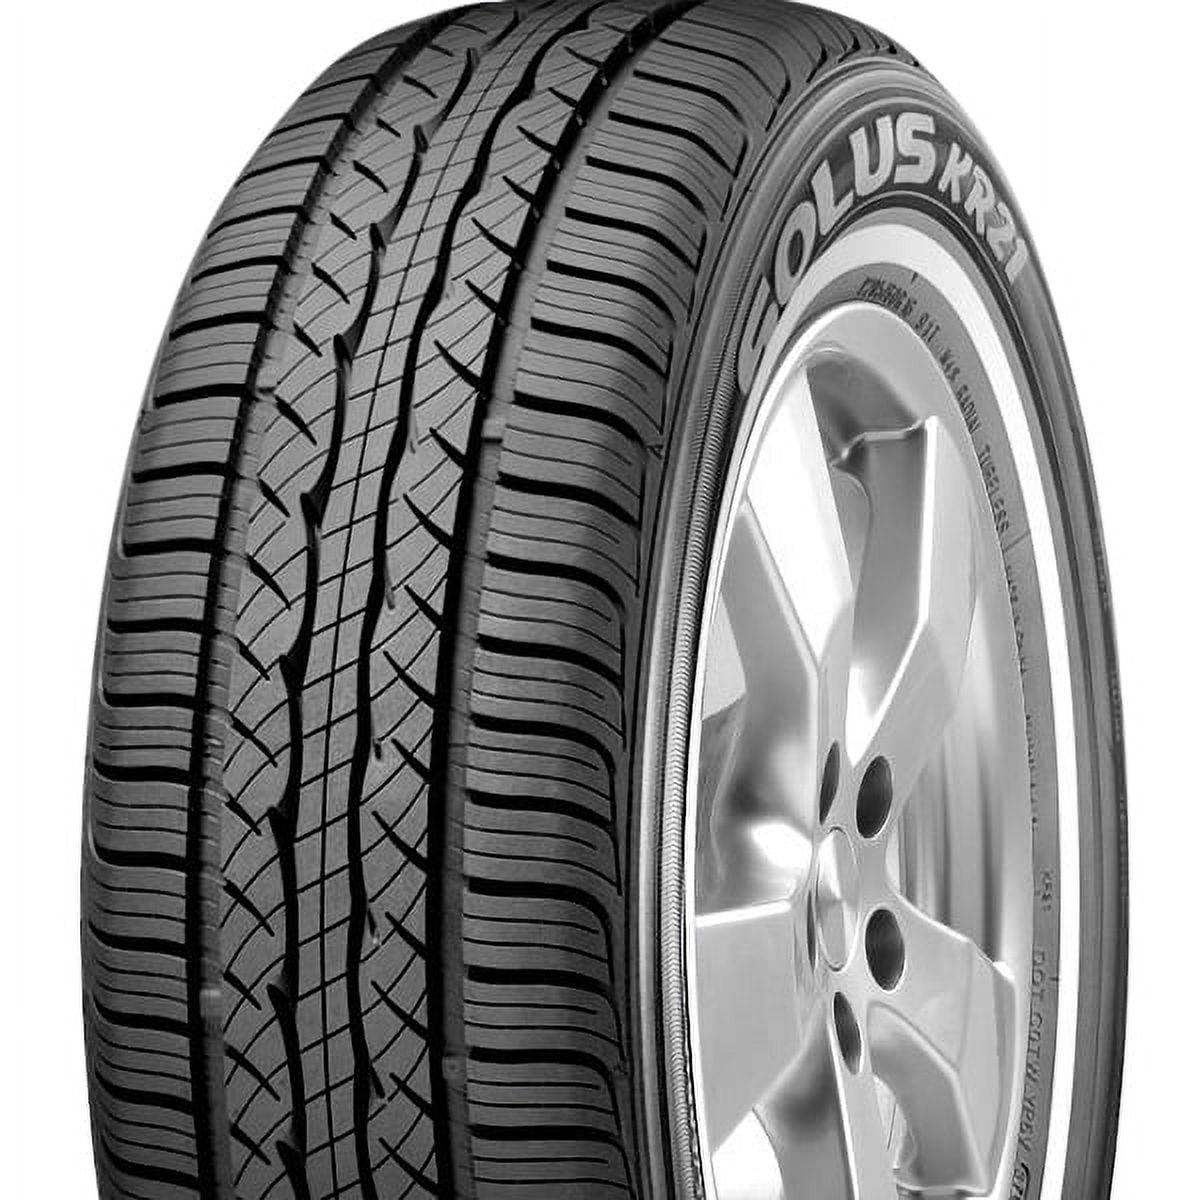 Assure Quality / DX, 82T New Accent All Kumho Tires Season / KR21 2005 GLS 1 Fits: 1990-96 Honda Solus Civic 1899813 1757013 175/70/13 Hyundai P175/70R13